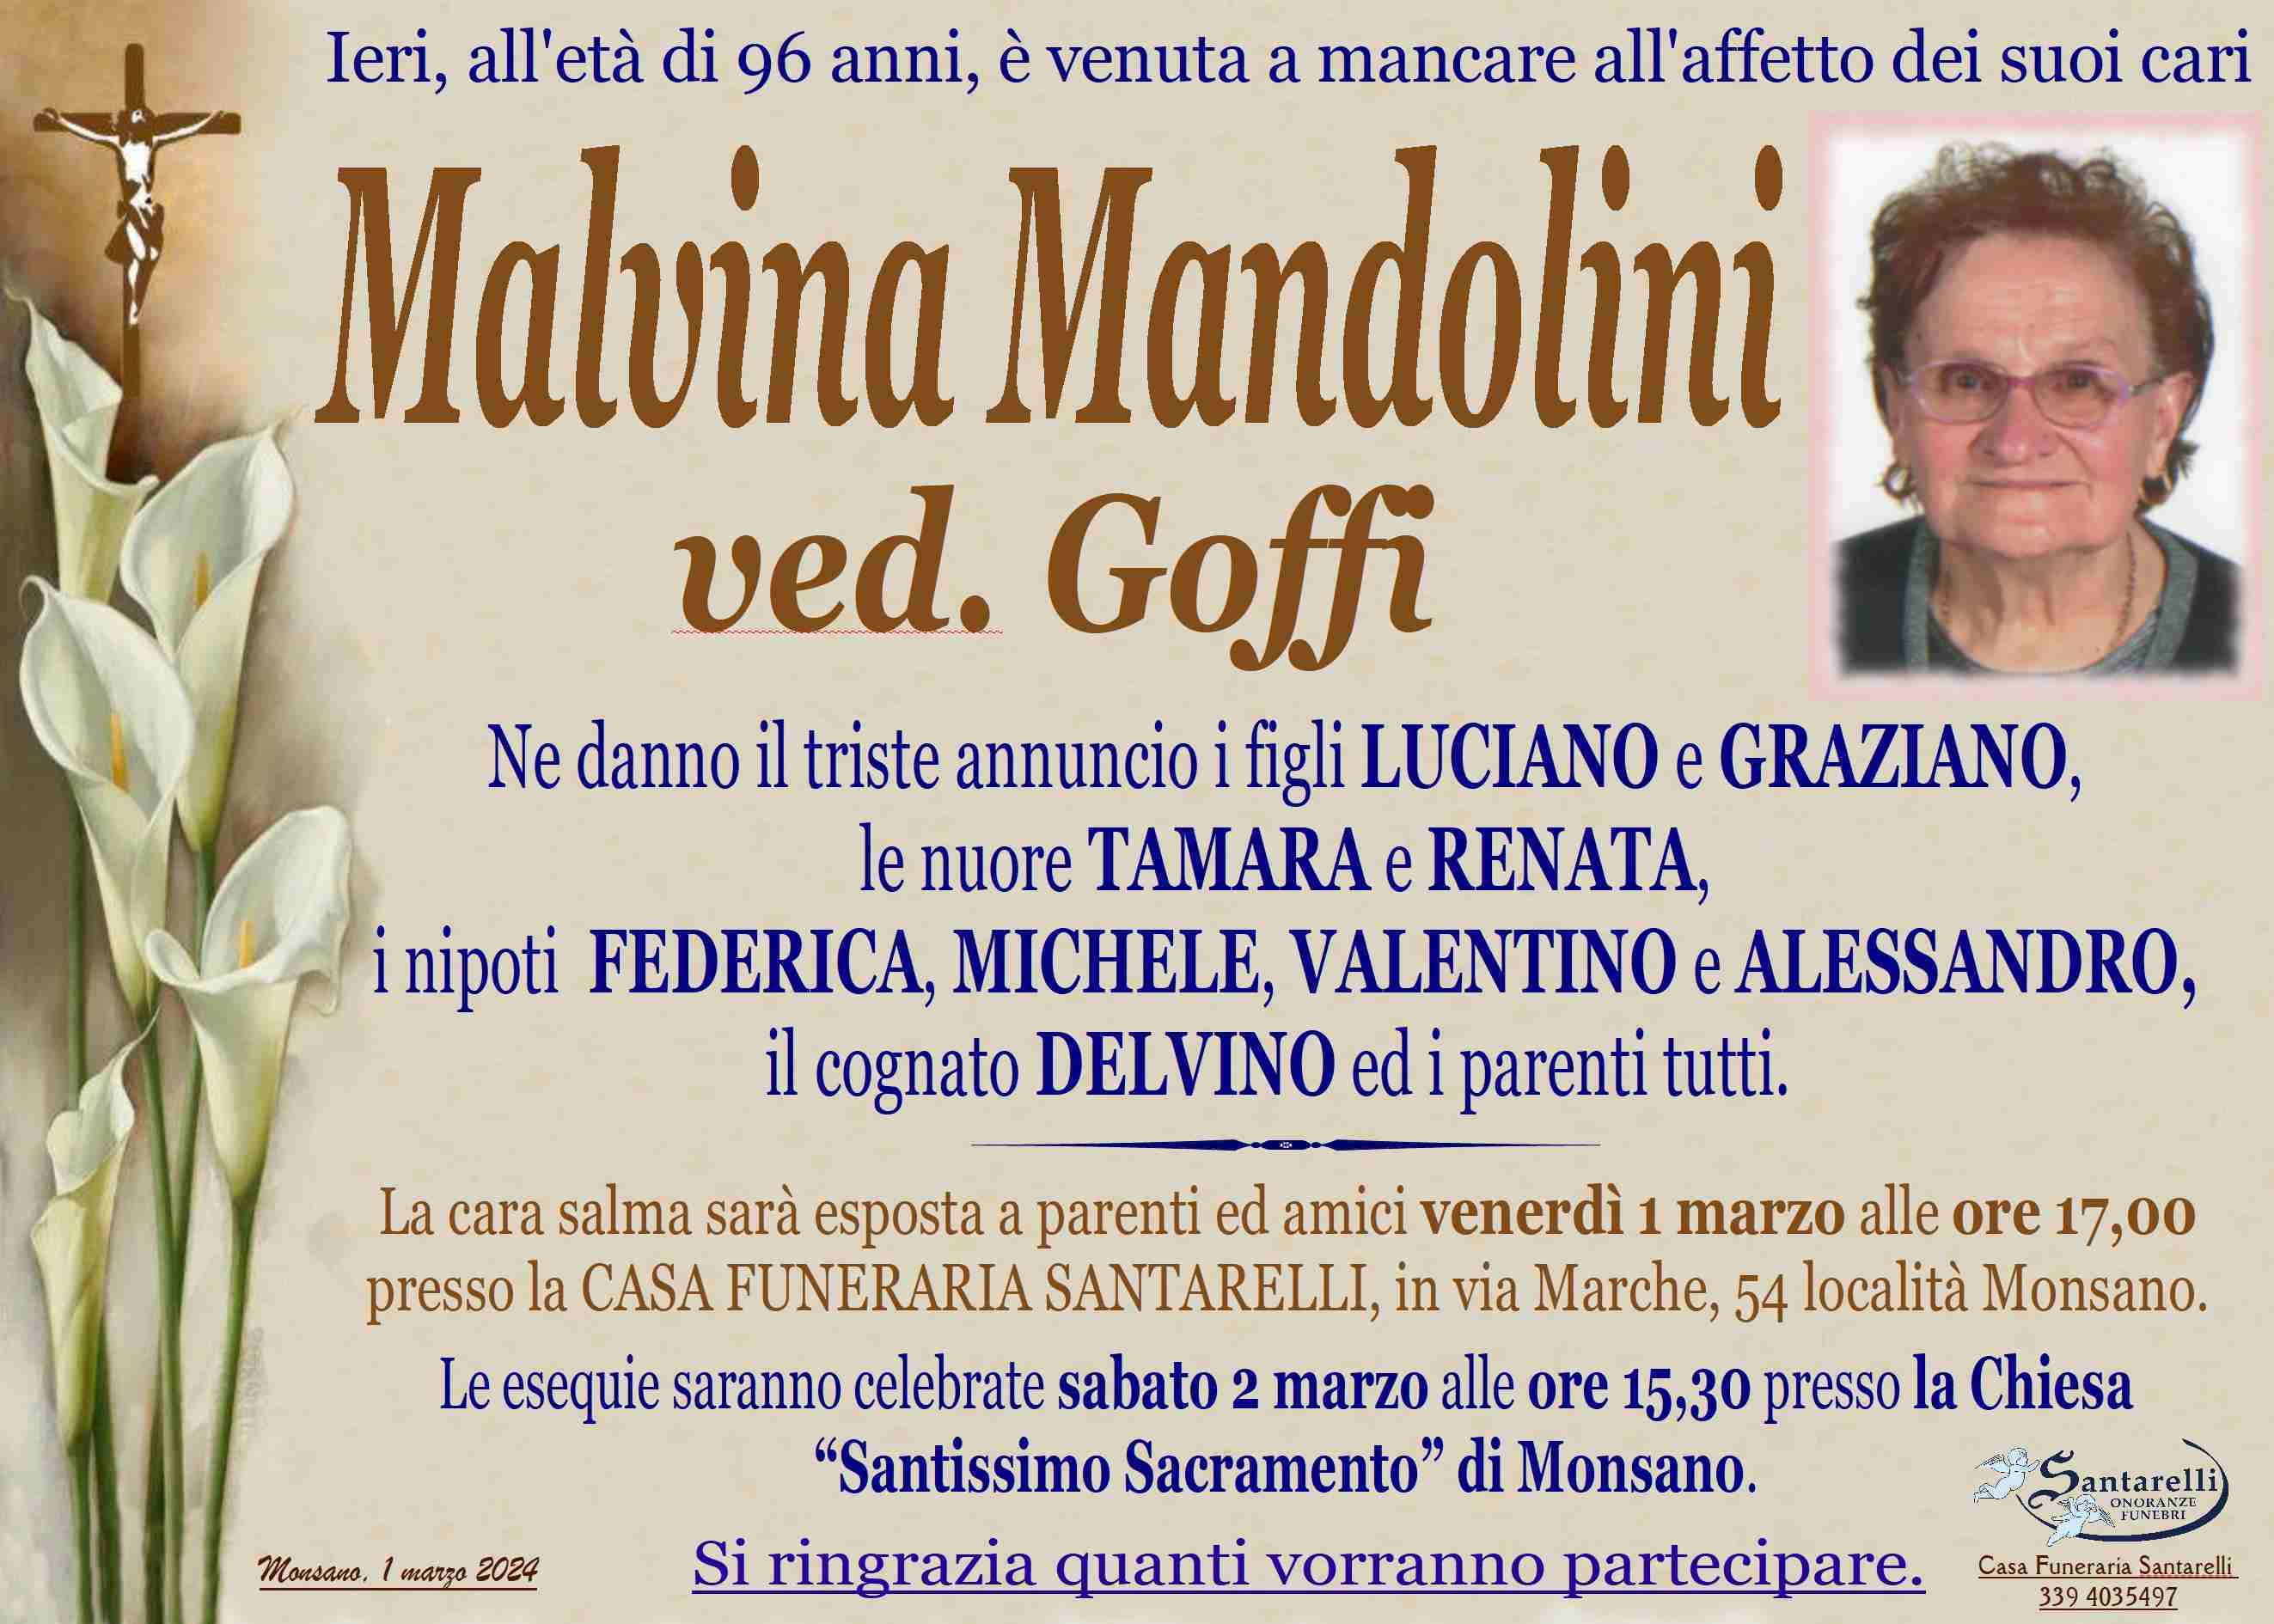 Malvina Mandolini